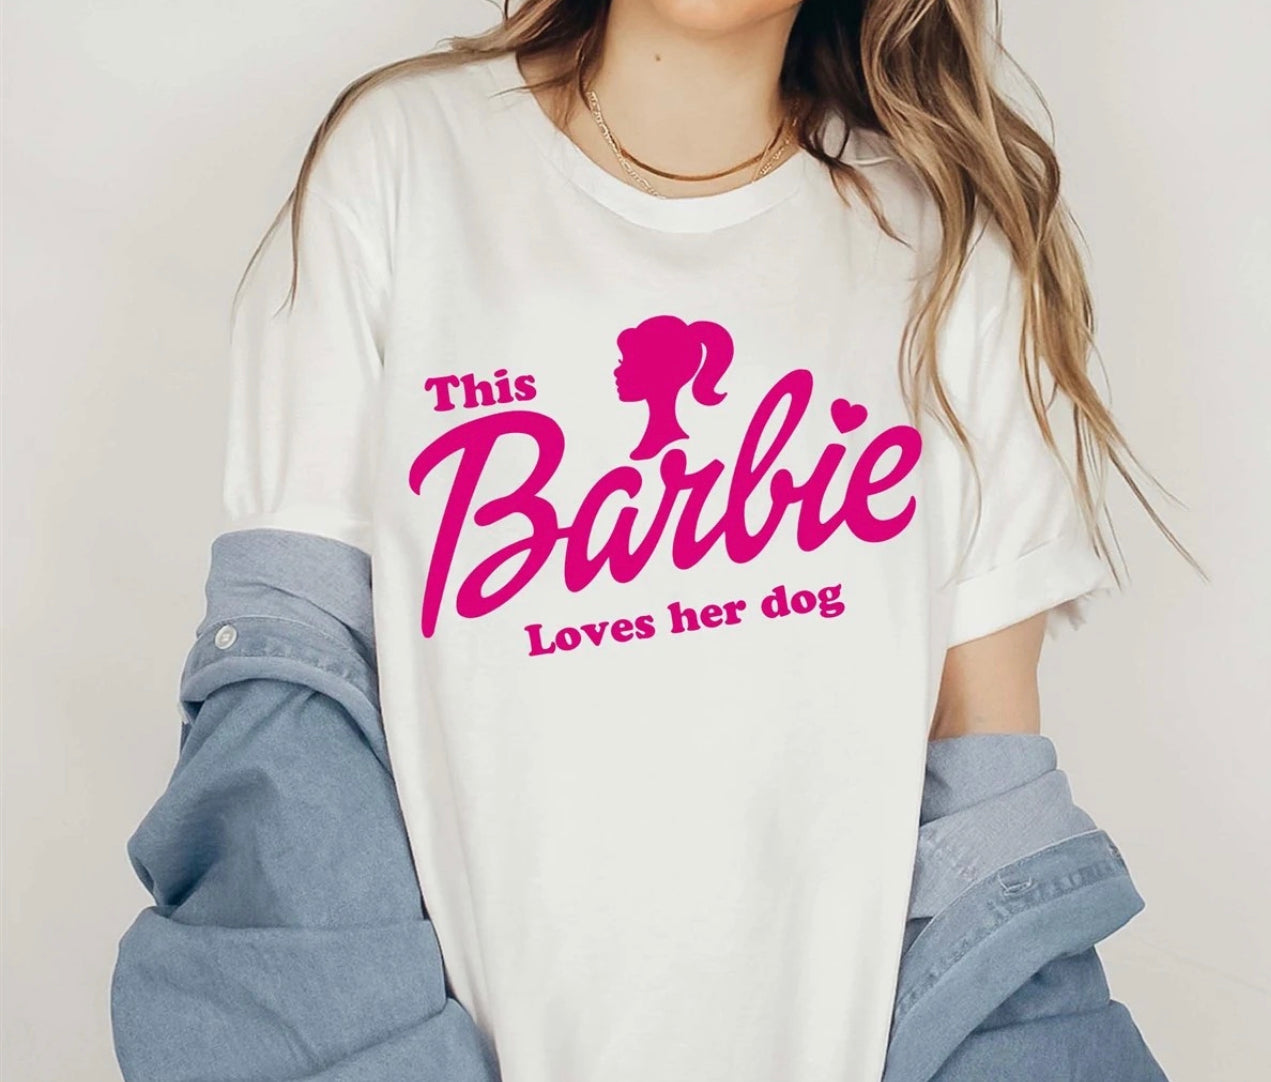 This Barbie Loves her dog shirt| Barbie tee| Barbie movie| Barbie shirt| Barbie shirt| Barbie tee| Barbie Girl shirt